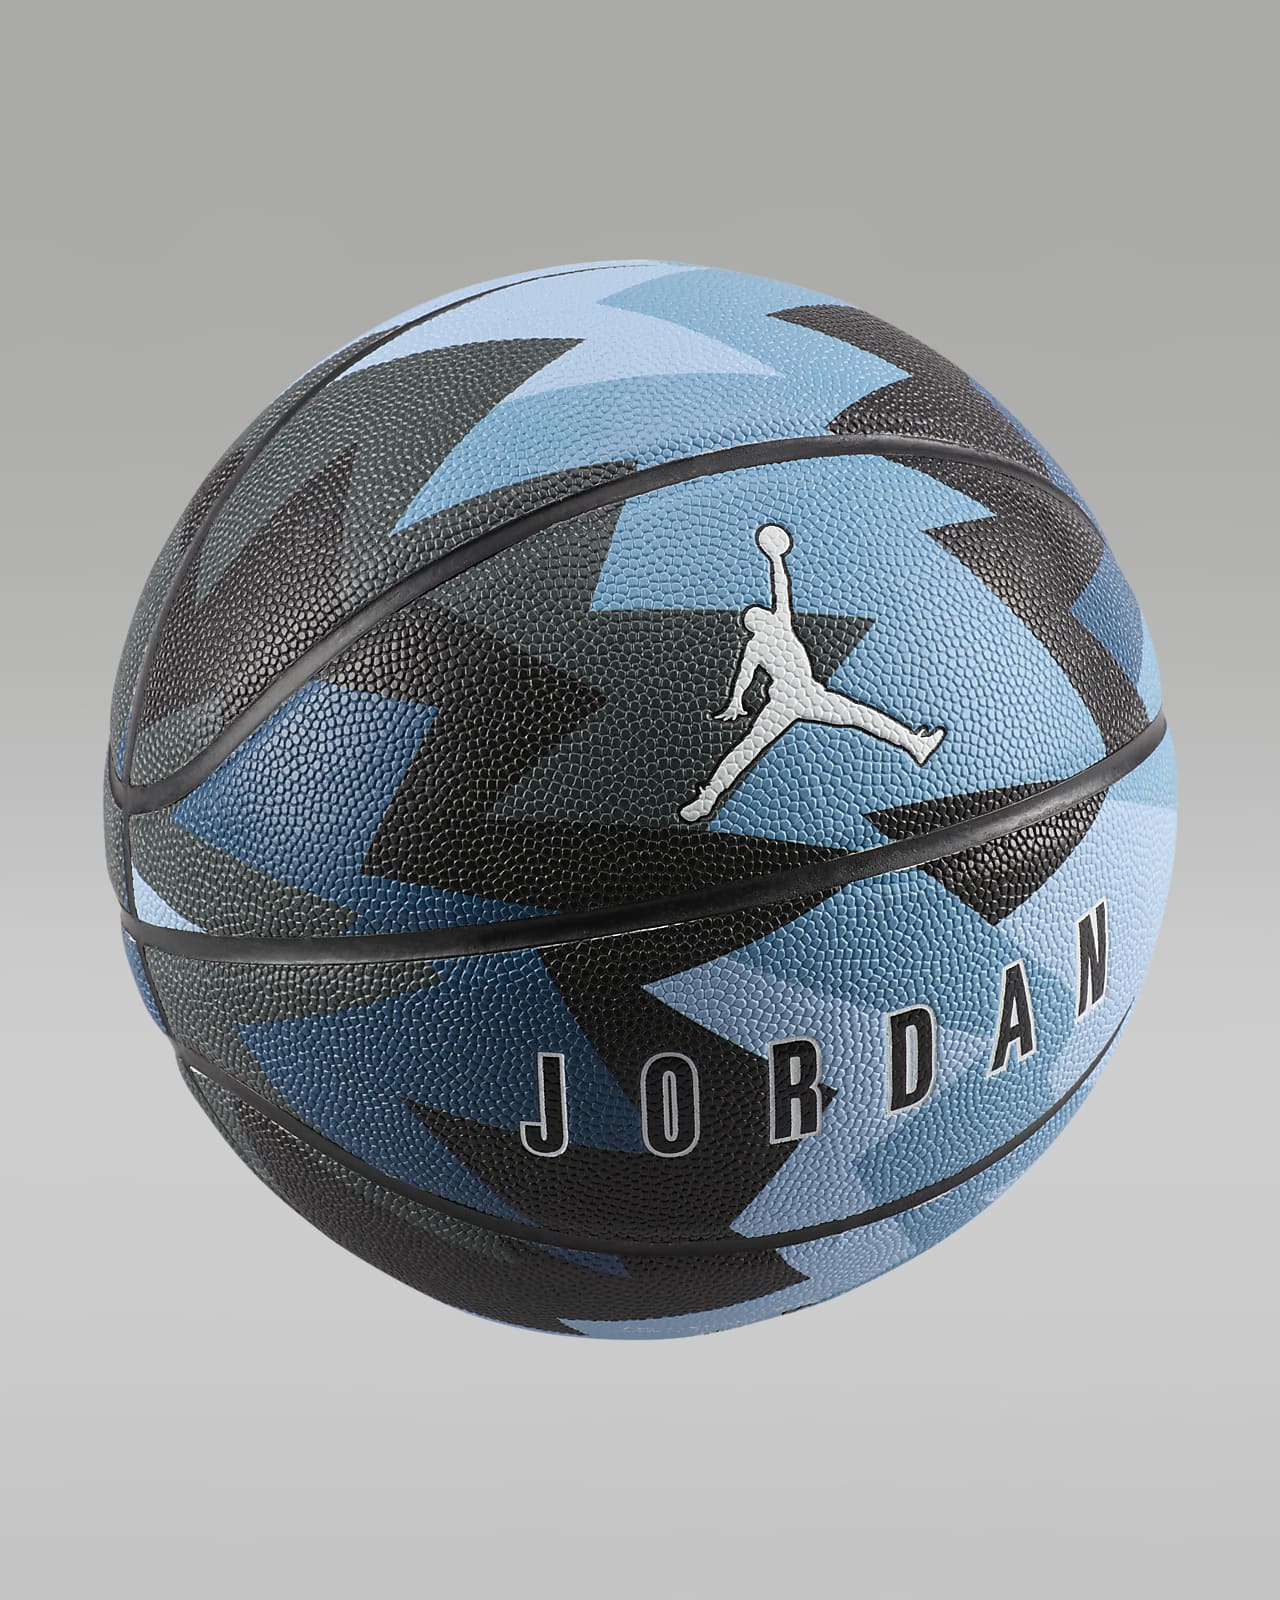 Jordan 8P Basketball (Deflated)